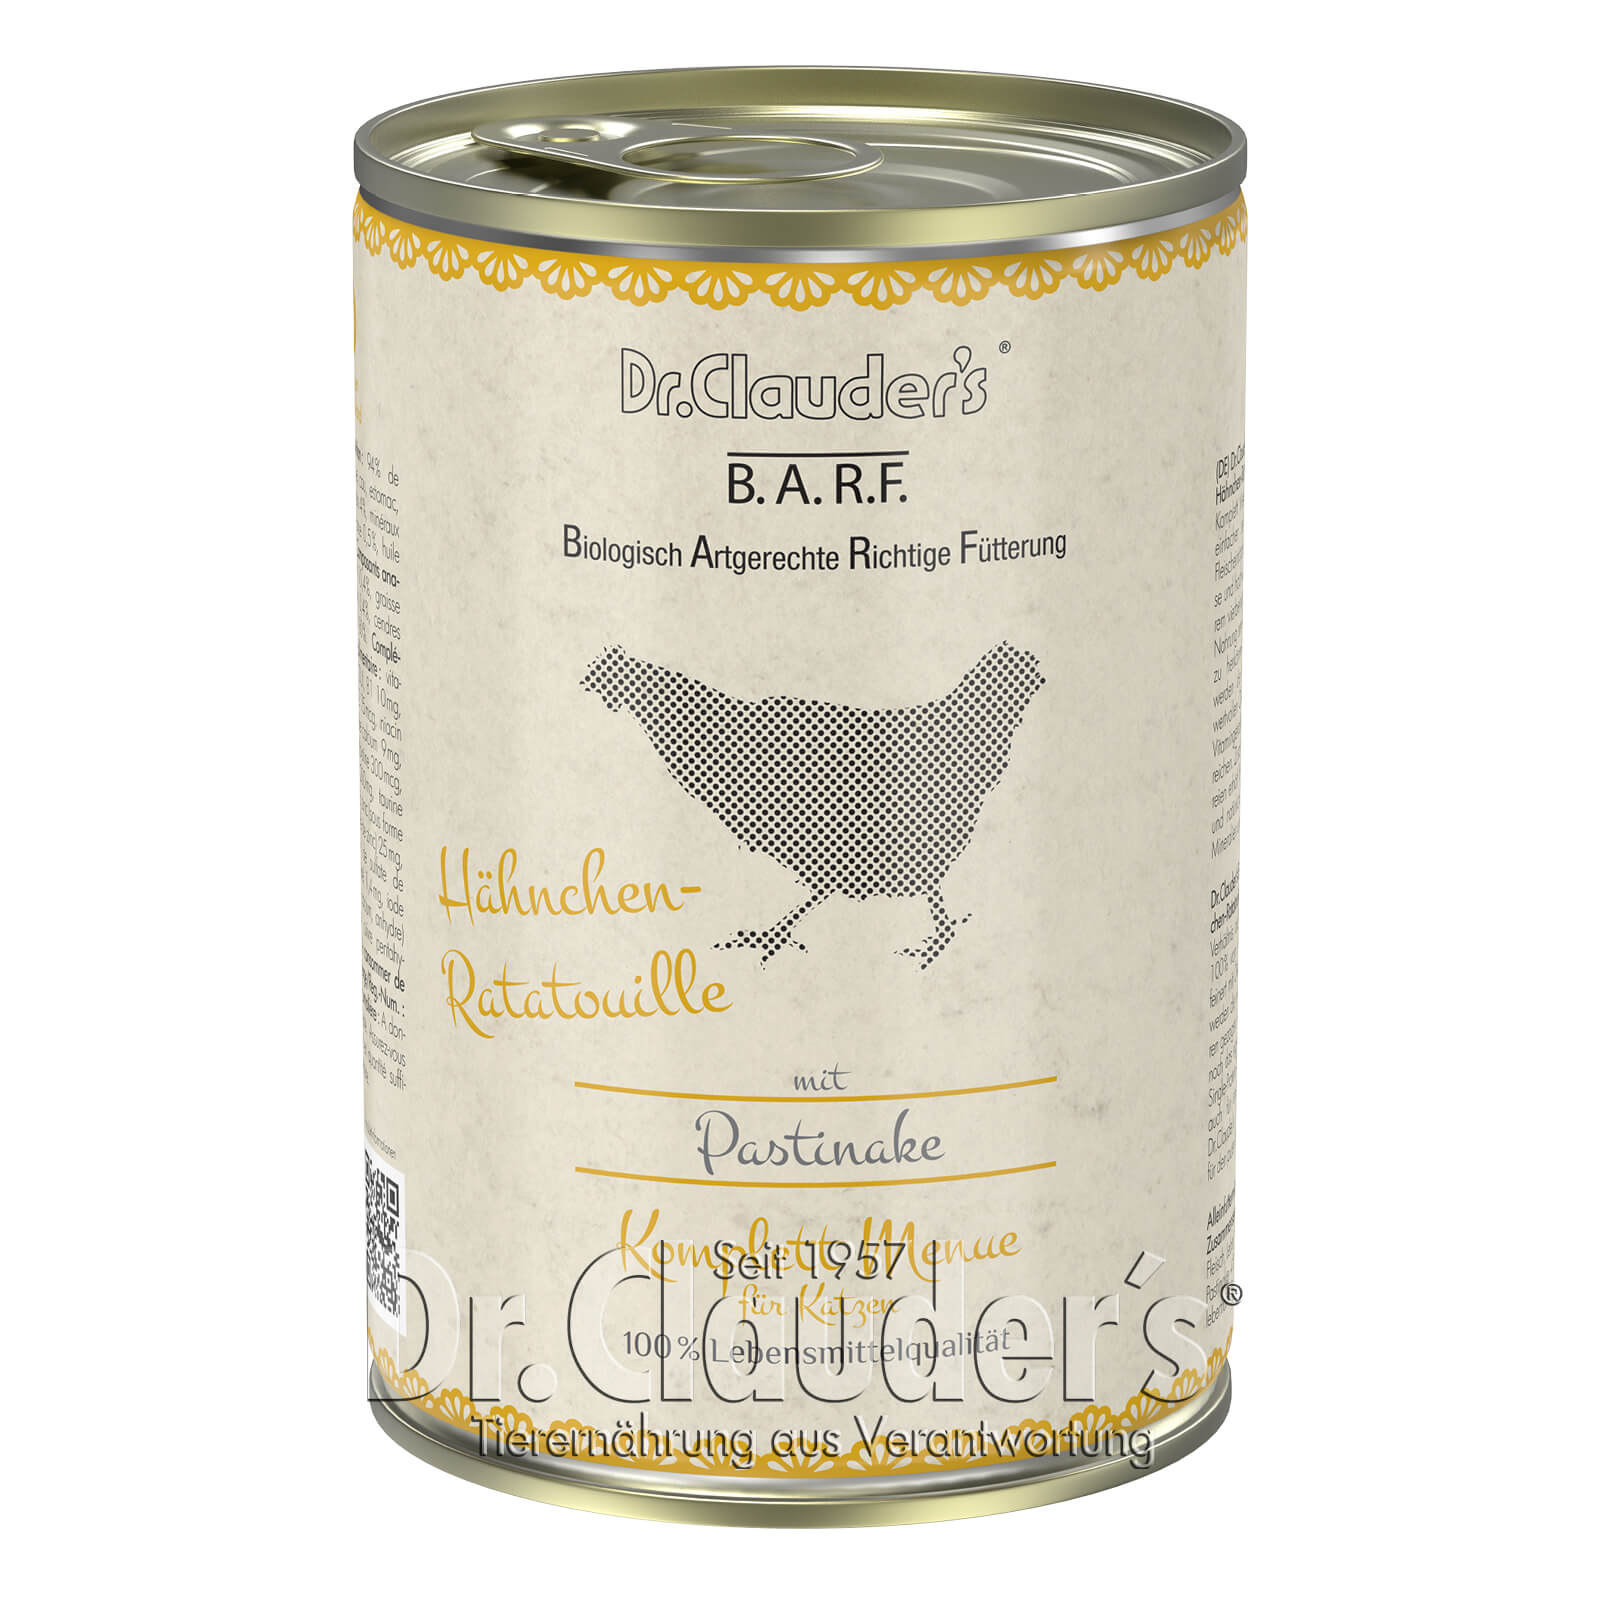 Dr.Clauder's B.A.R.F. Complete Menu Chicken Ratatouille